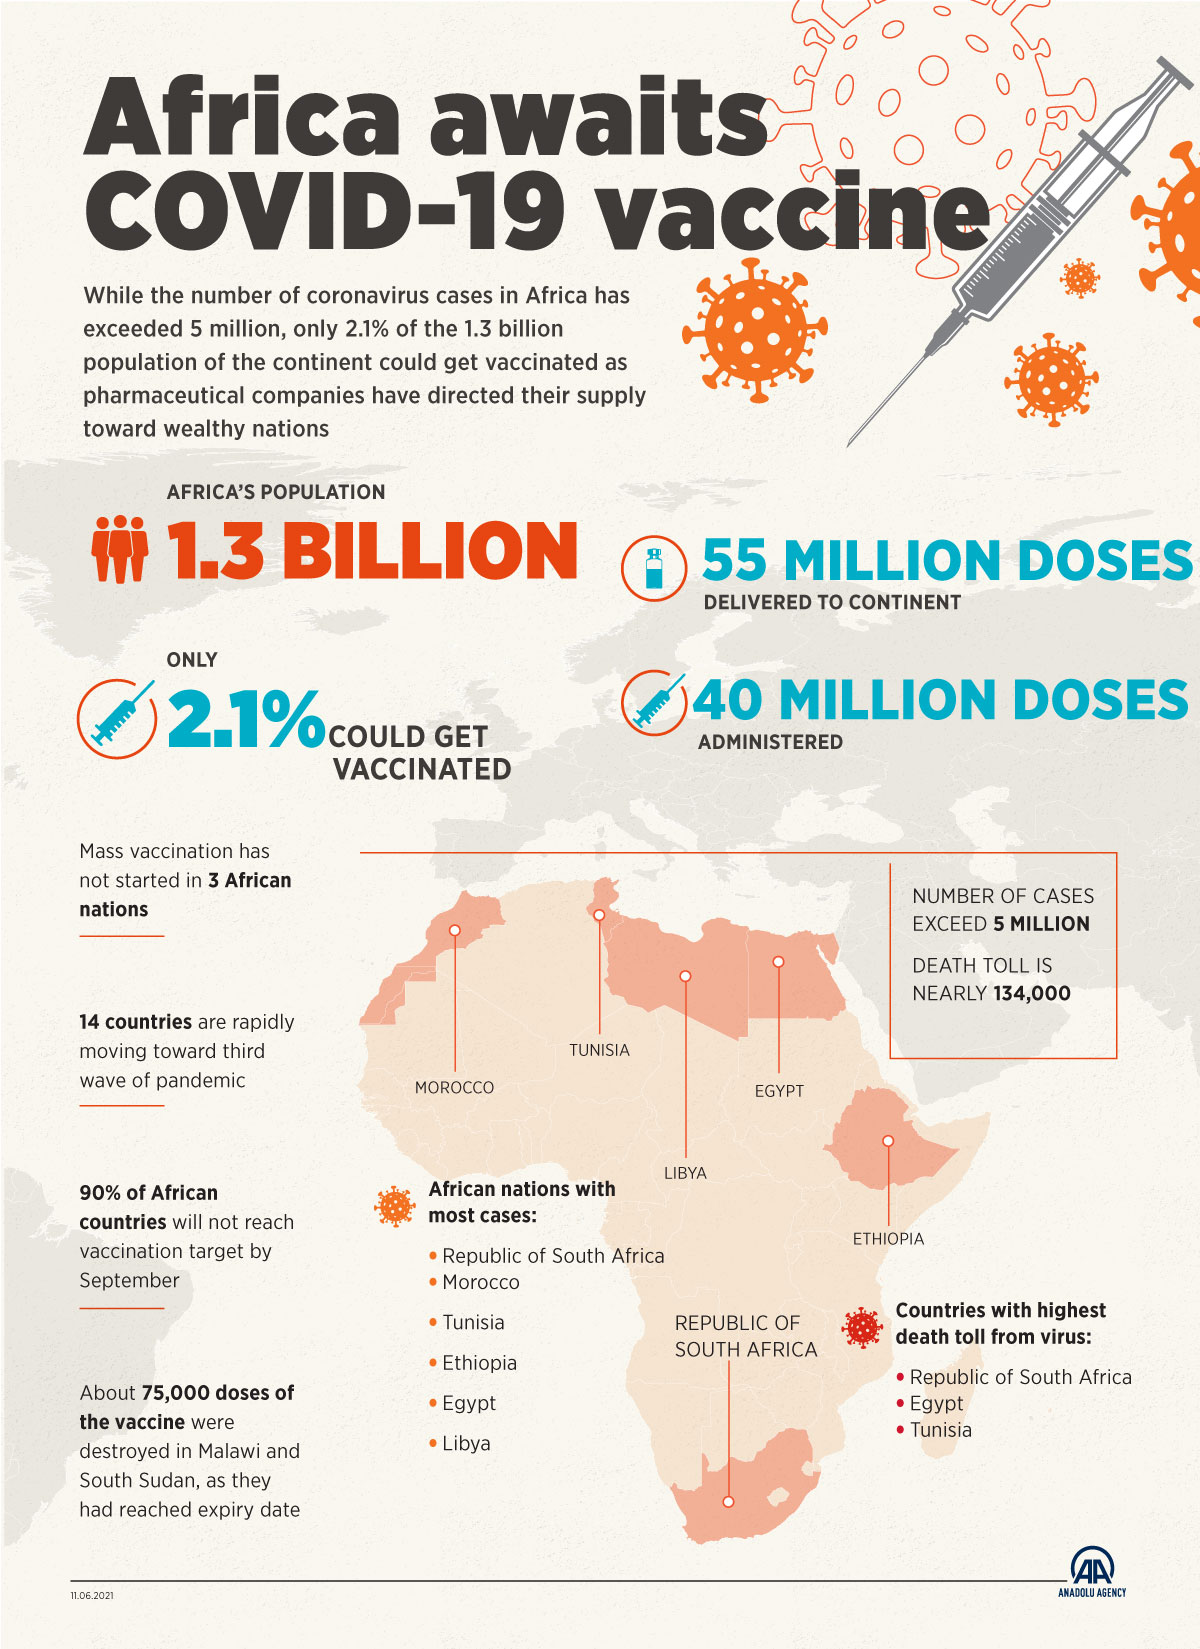 Africa awaits COVID-19 vaccine